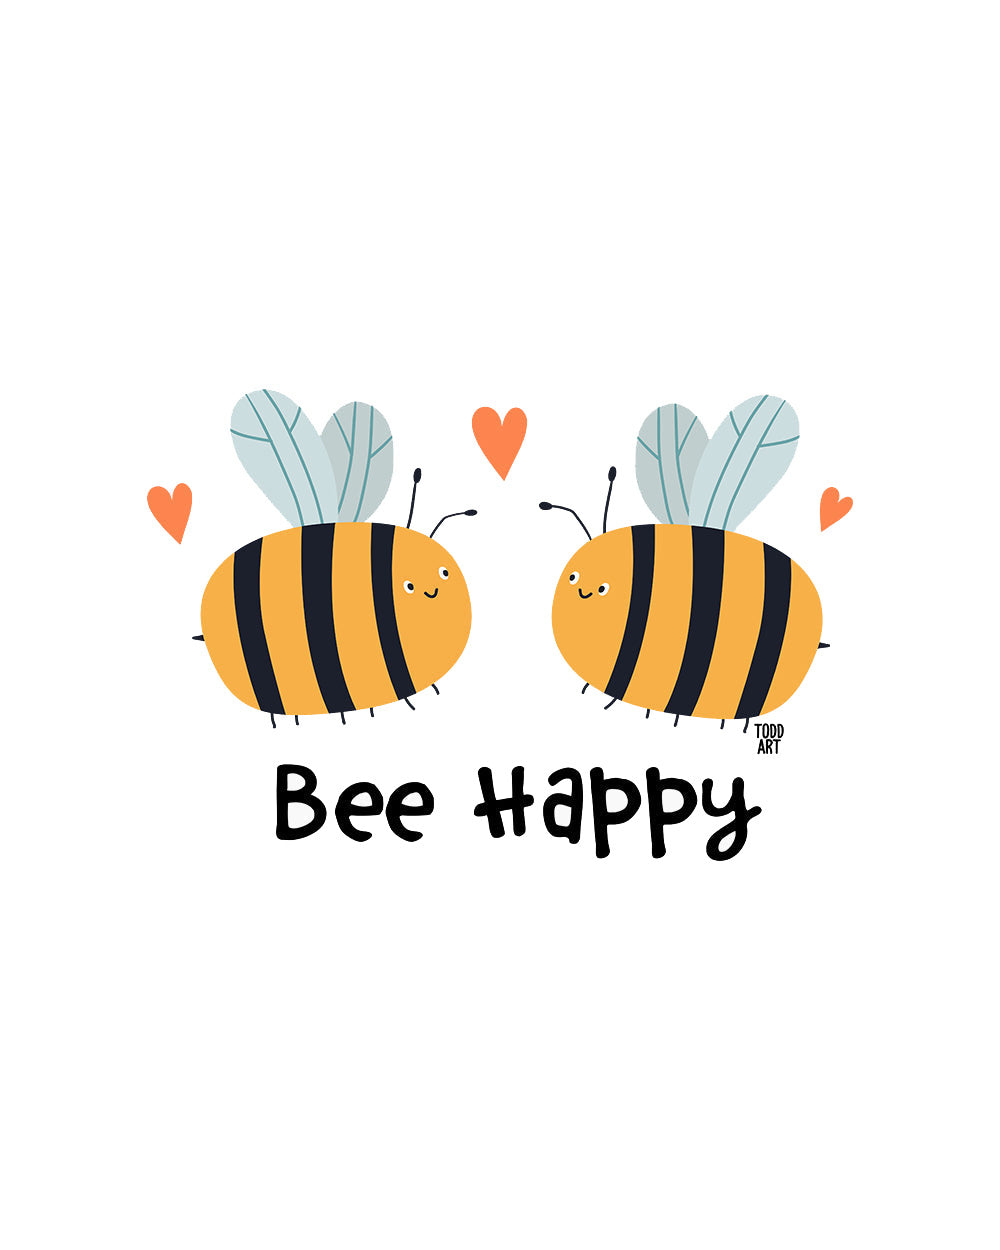 Bee Happy Bees Funny Honey Cute Nature Slogan Pun Cotton T-Shirt